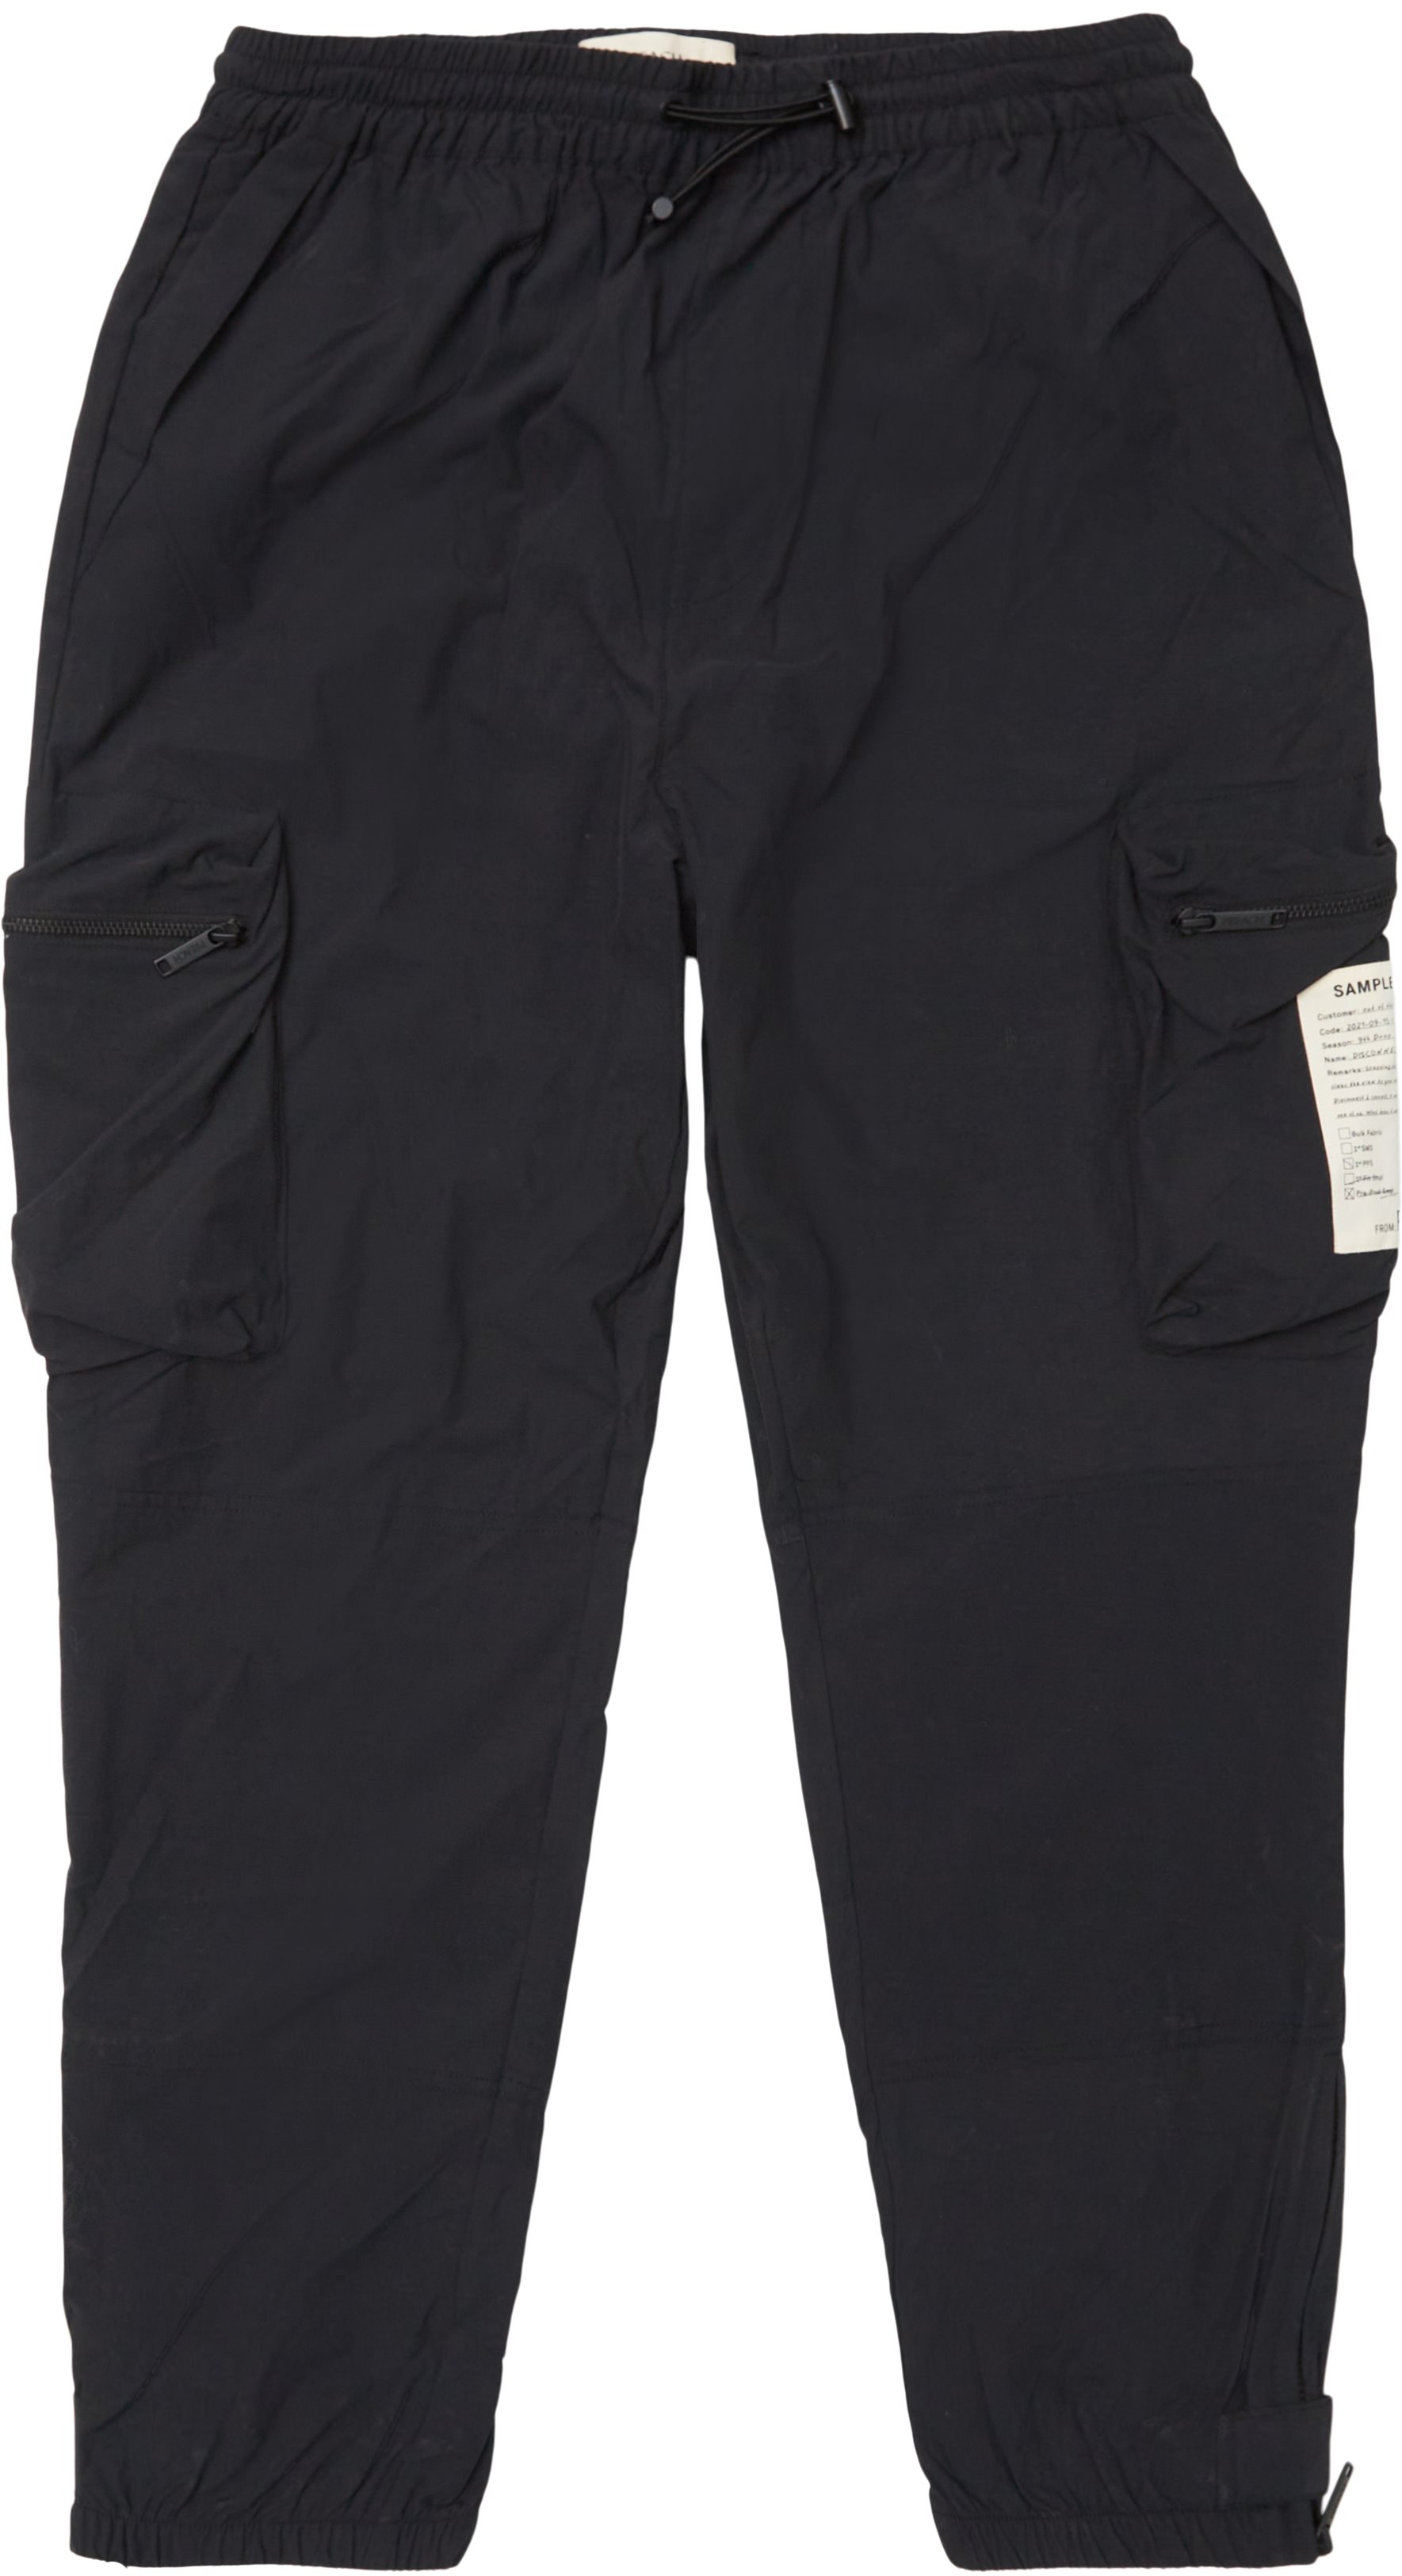 Zip Pants 206091 - Trousers - Loose fit - Black